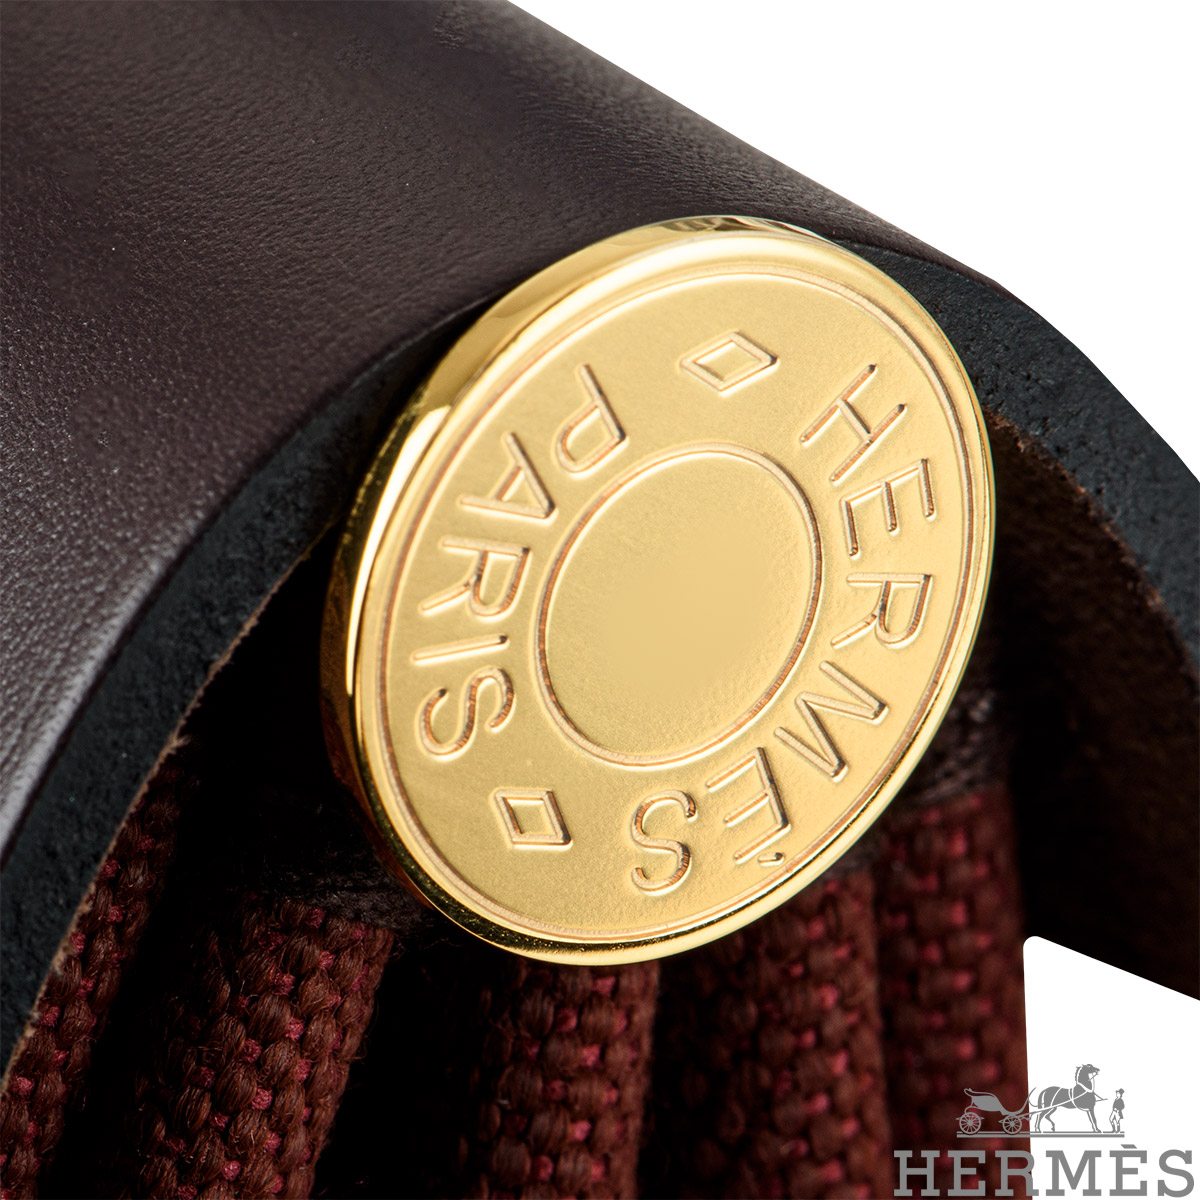 Hermès Herbag Zip Retourne 31 Rouge H/ Ebene GHW